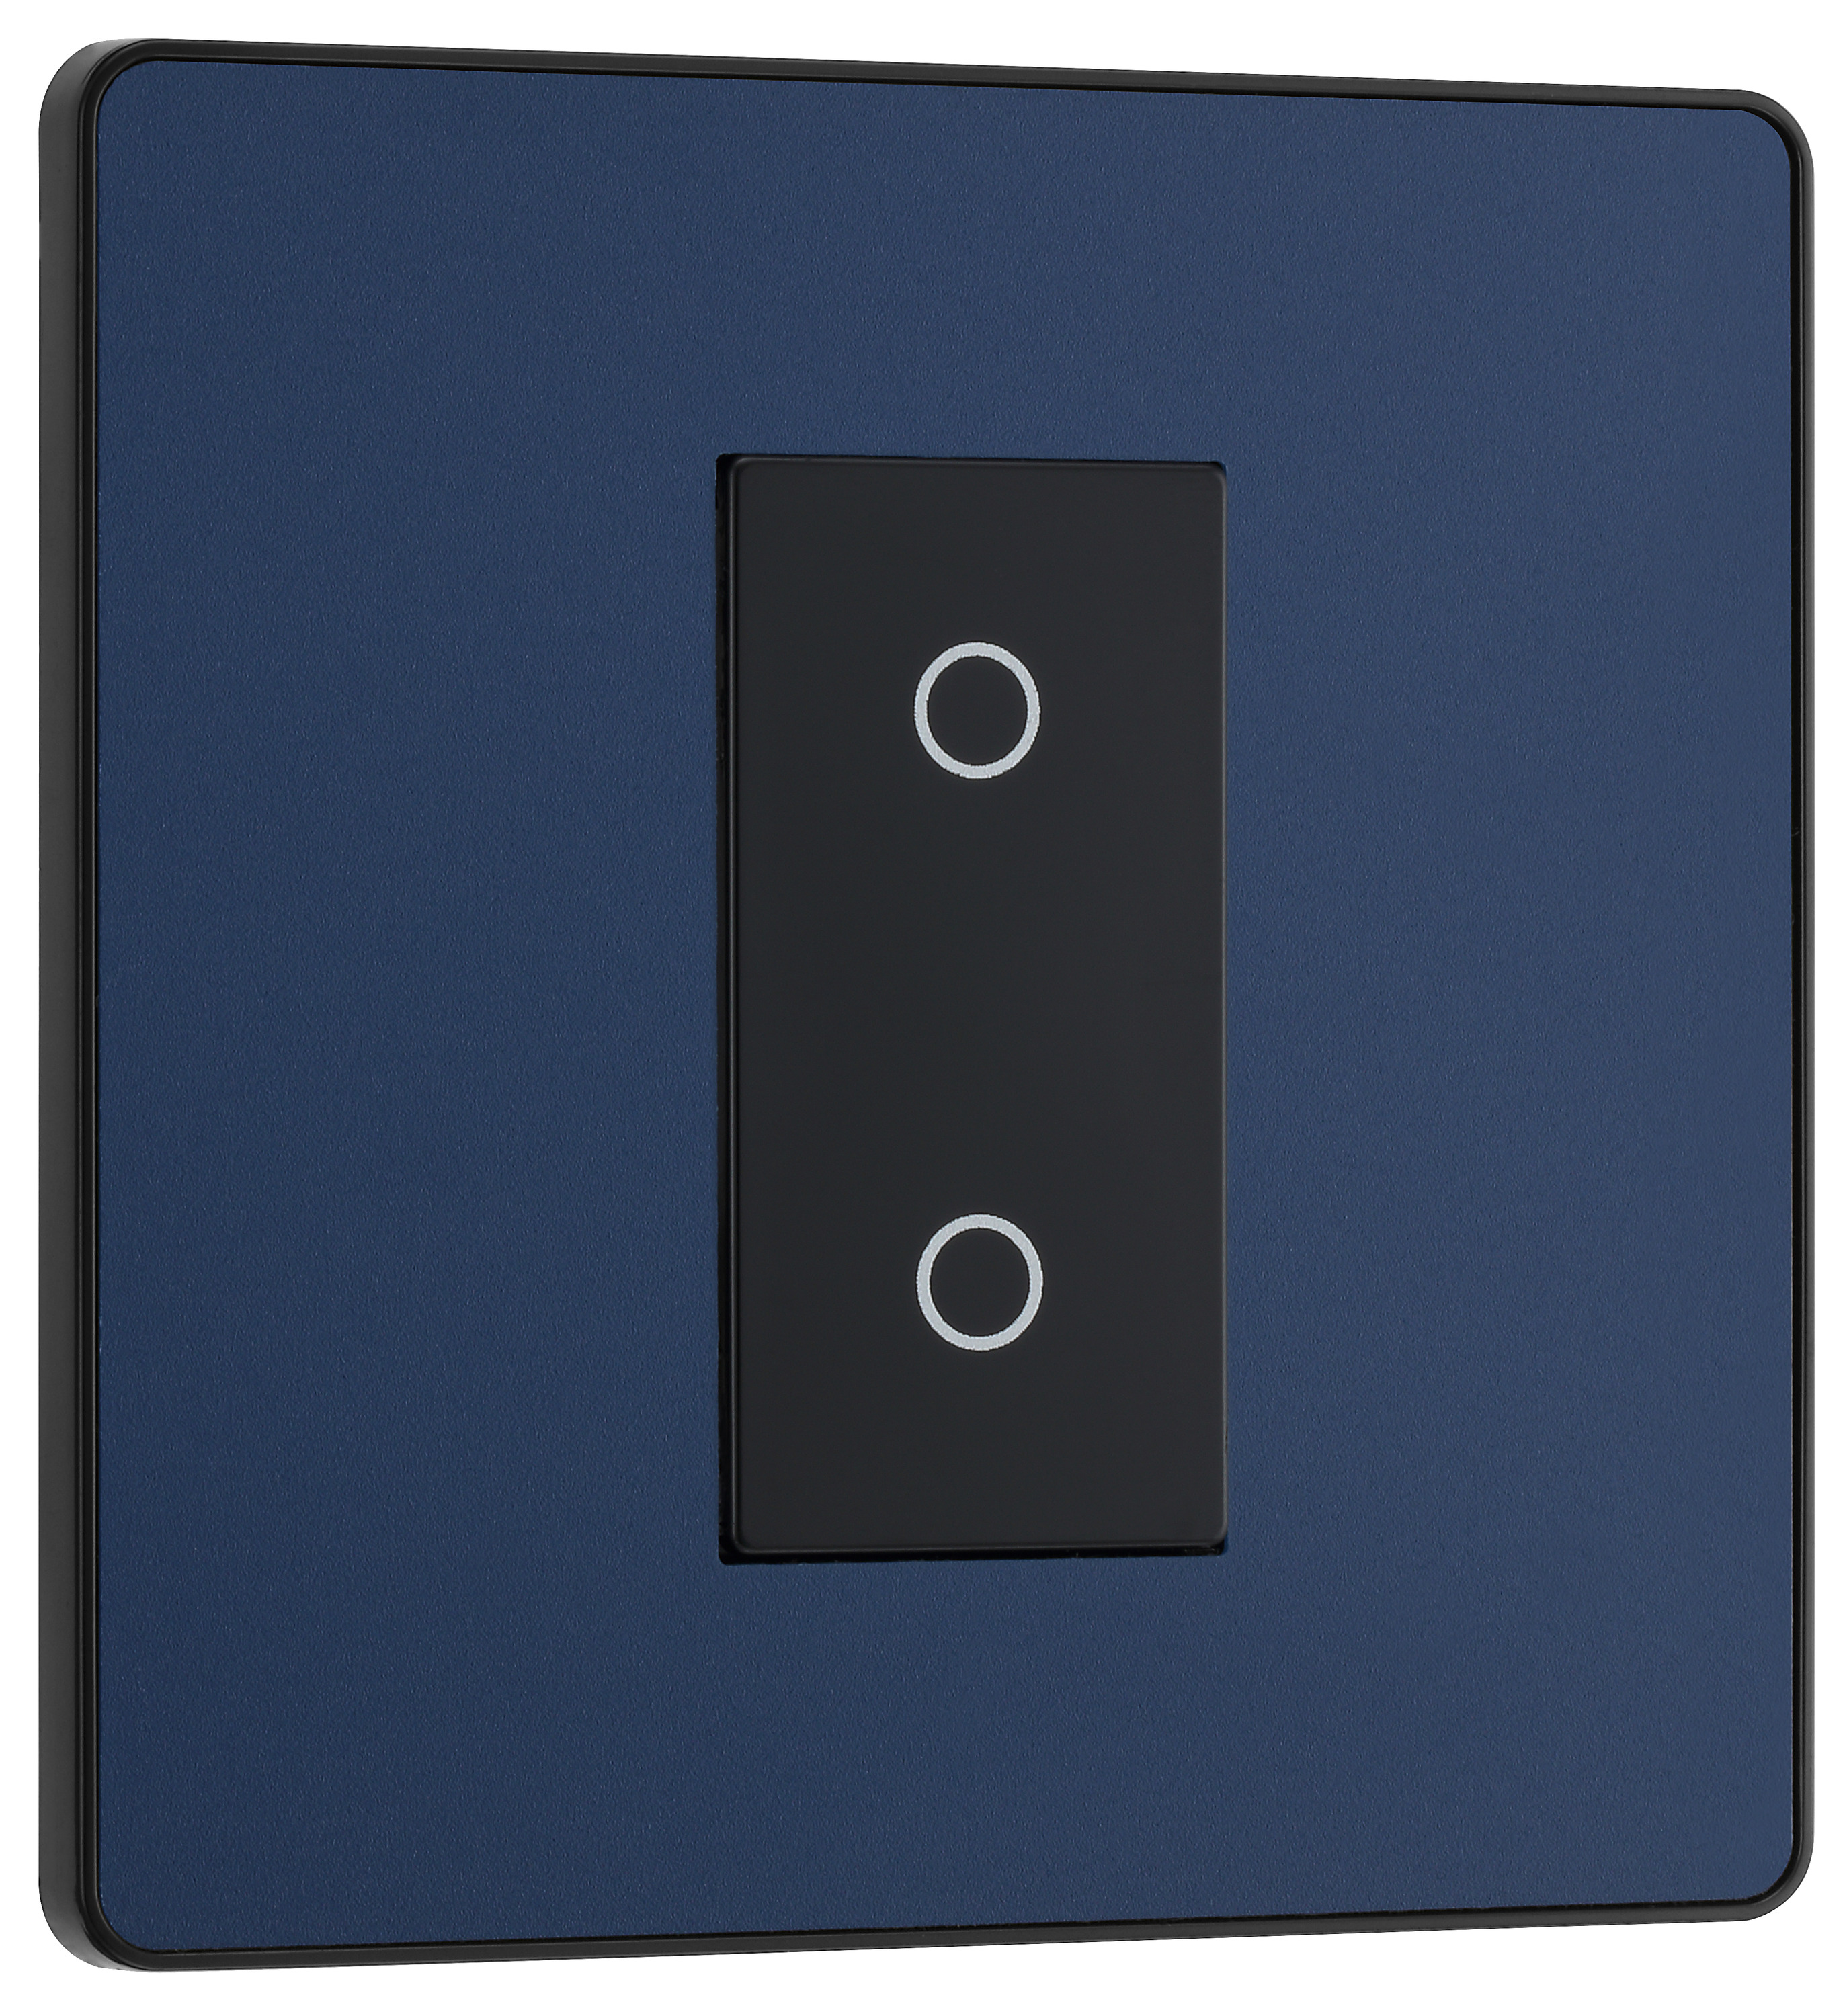 Image of BG Evolve Master Matt Blue 2 Way Single Touch Dimmer Switch - 200W